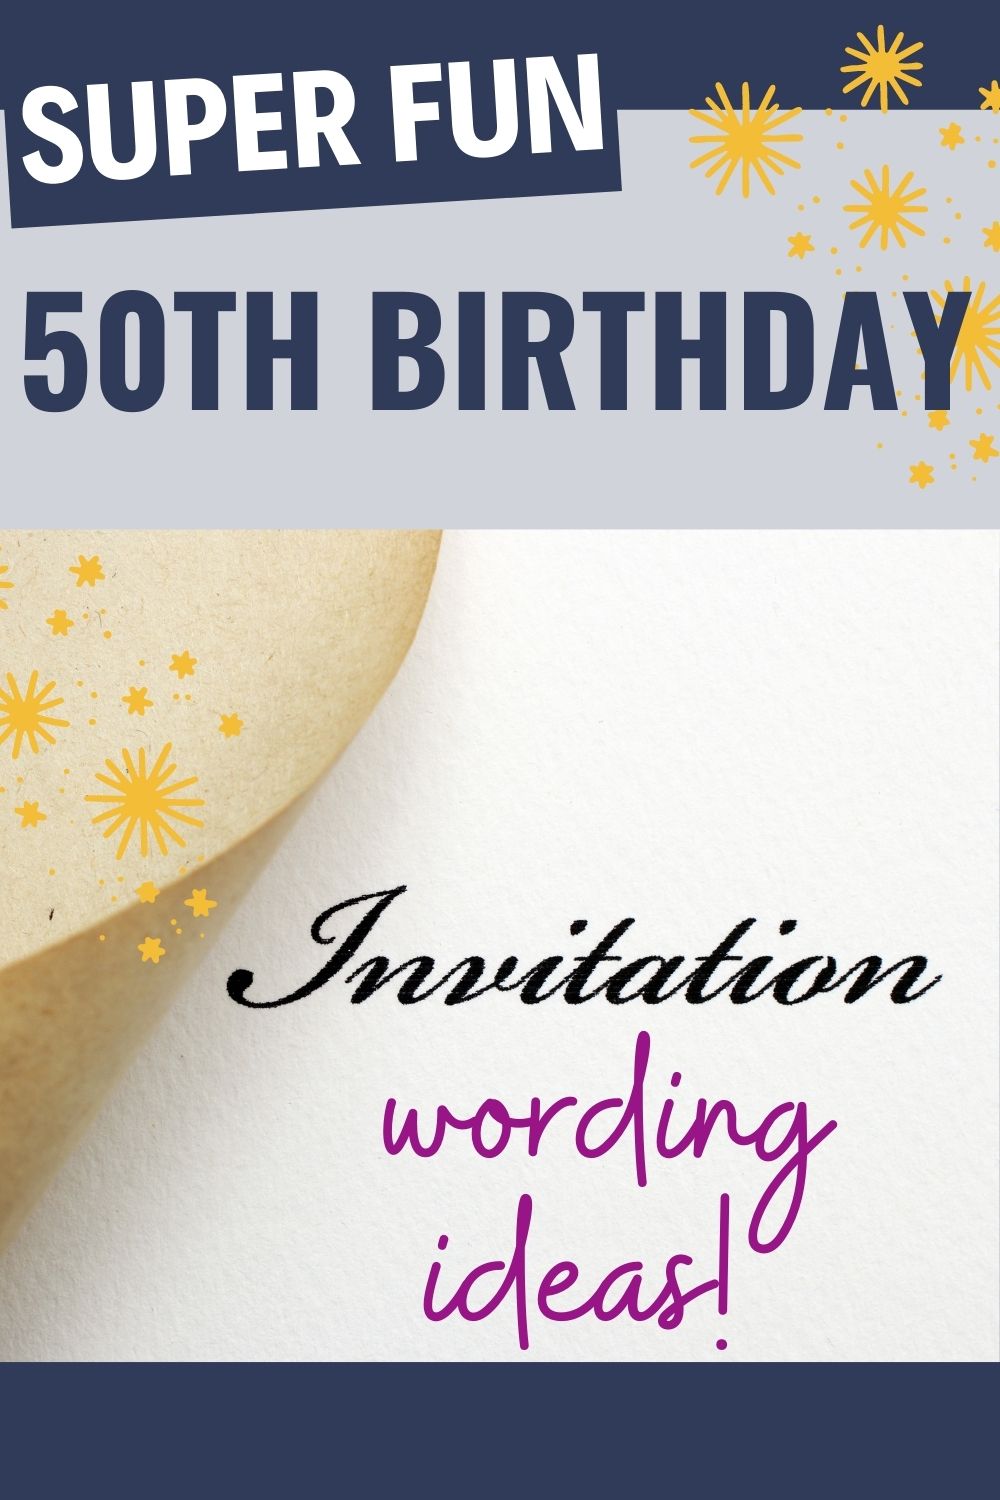 50th birthday invitation wording ideas